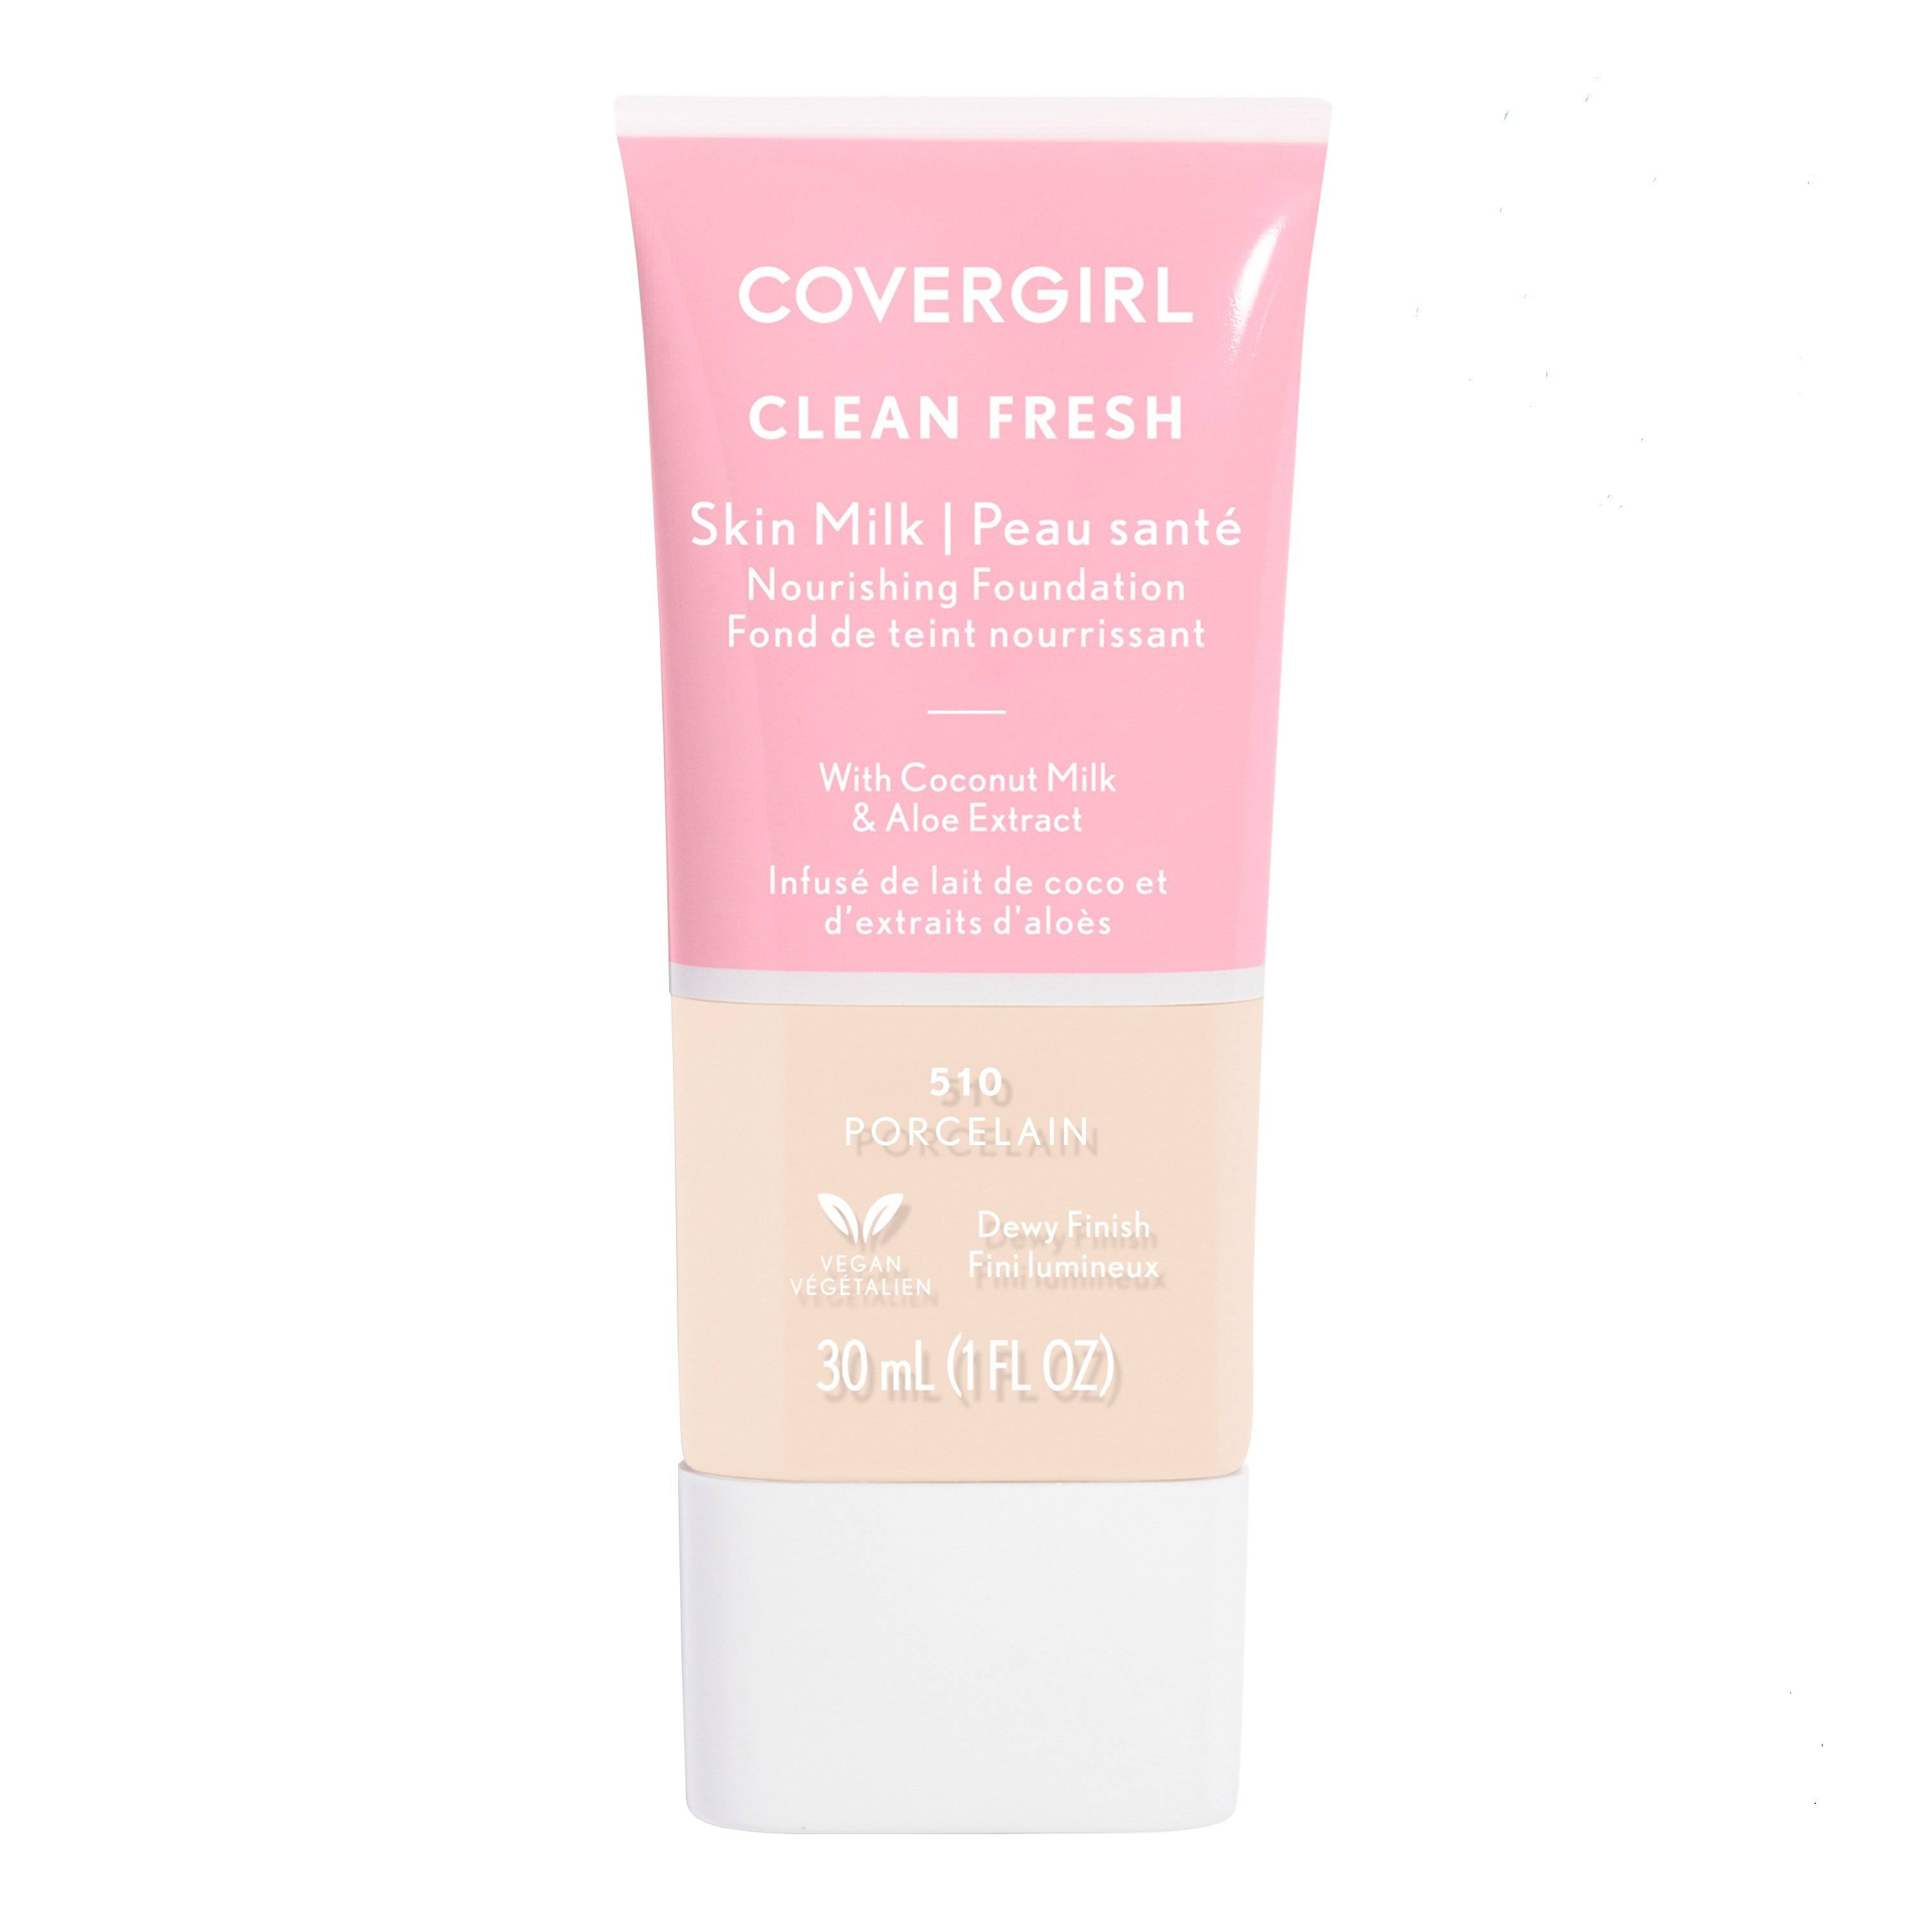 Covergirl Clean Fresh Skin Milk Foundation - Porcelain 510